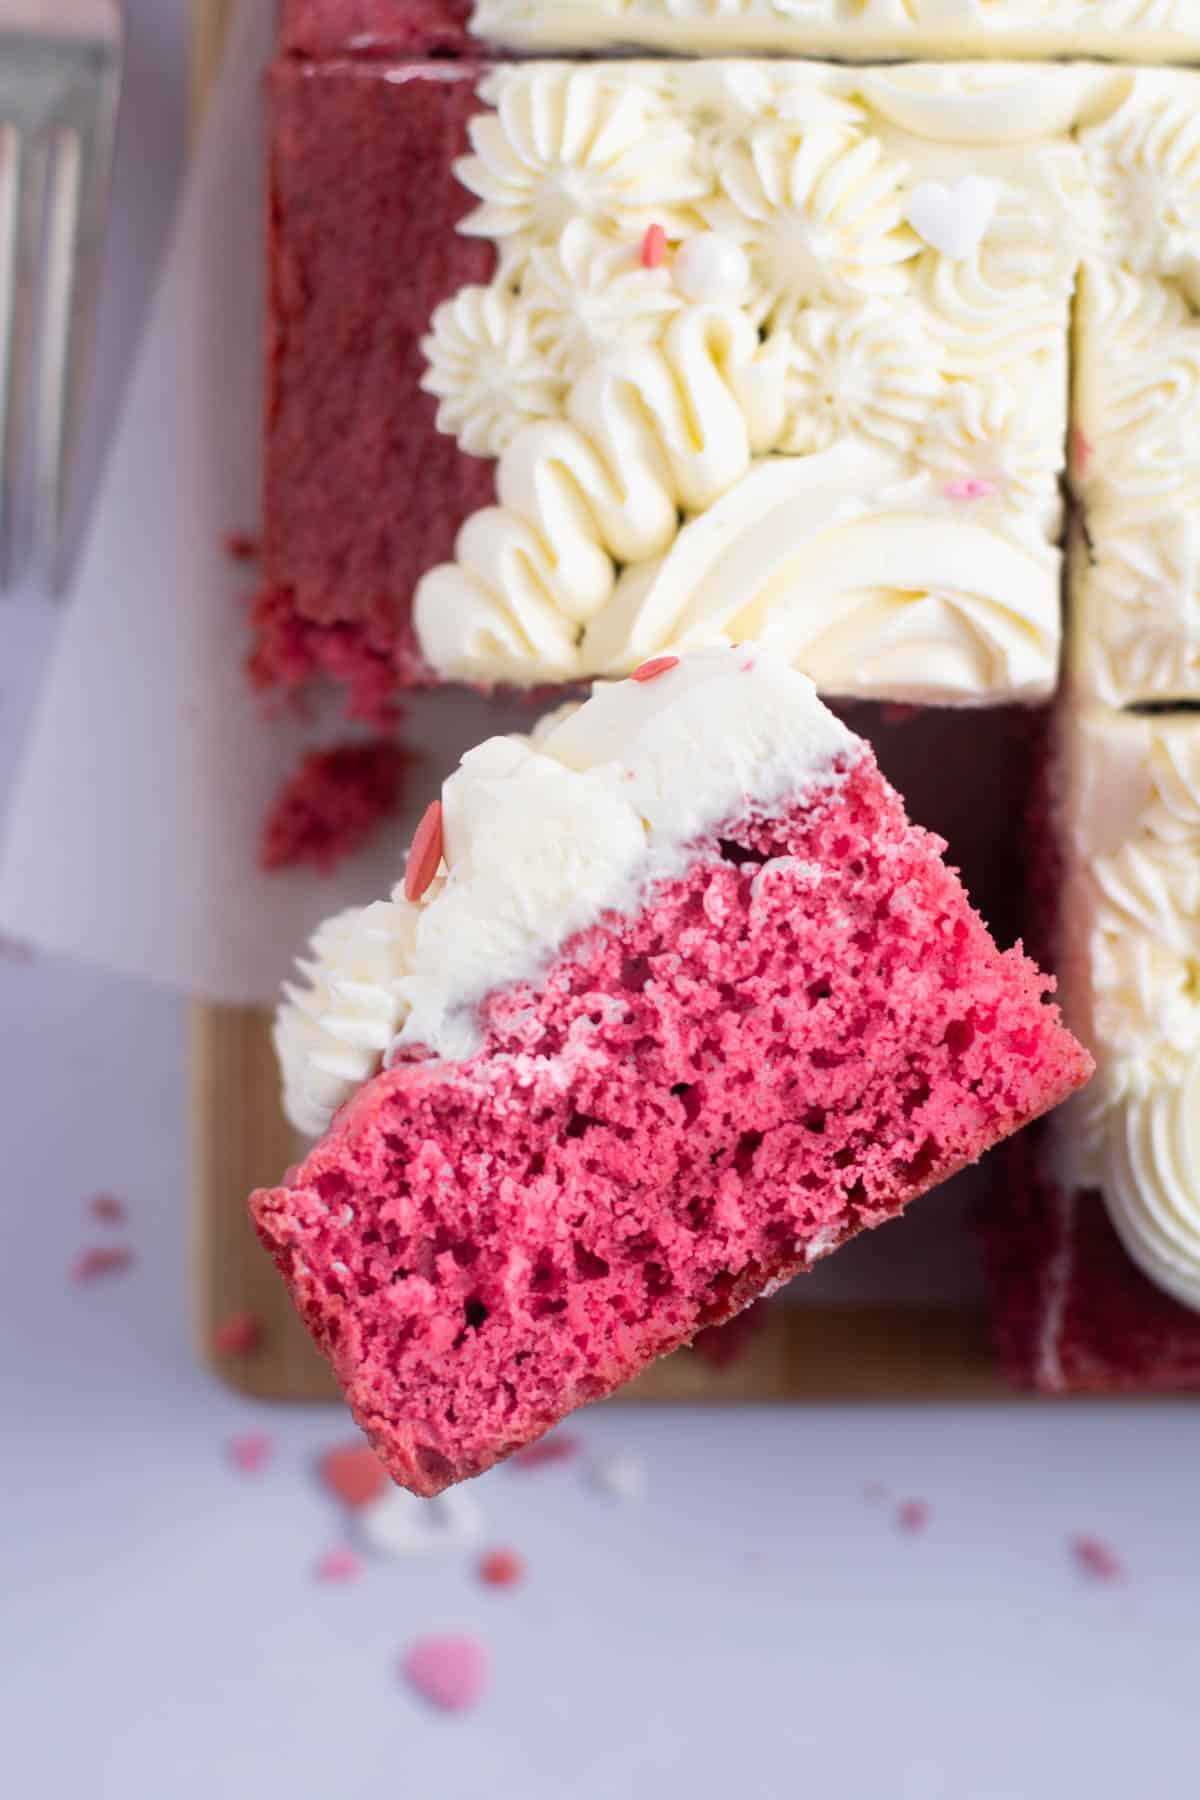 slice of pink velvet cake on it's side, showing the tender crumb